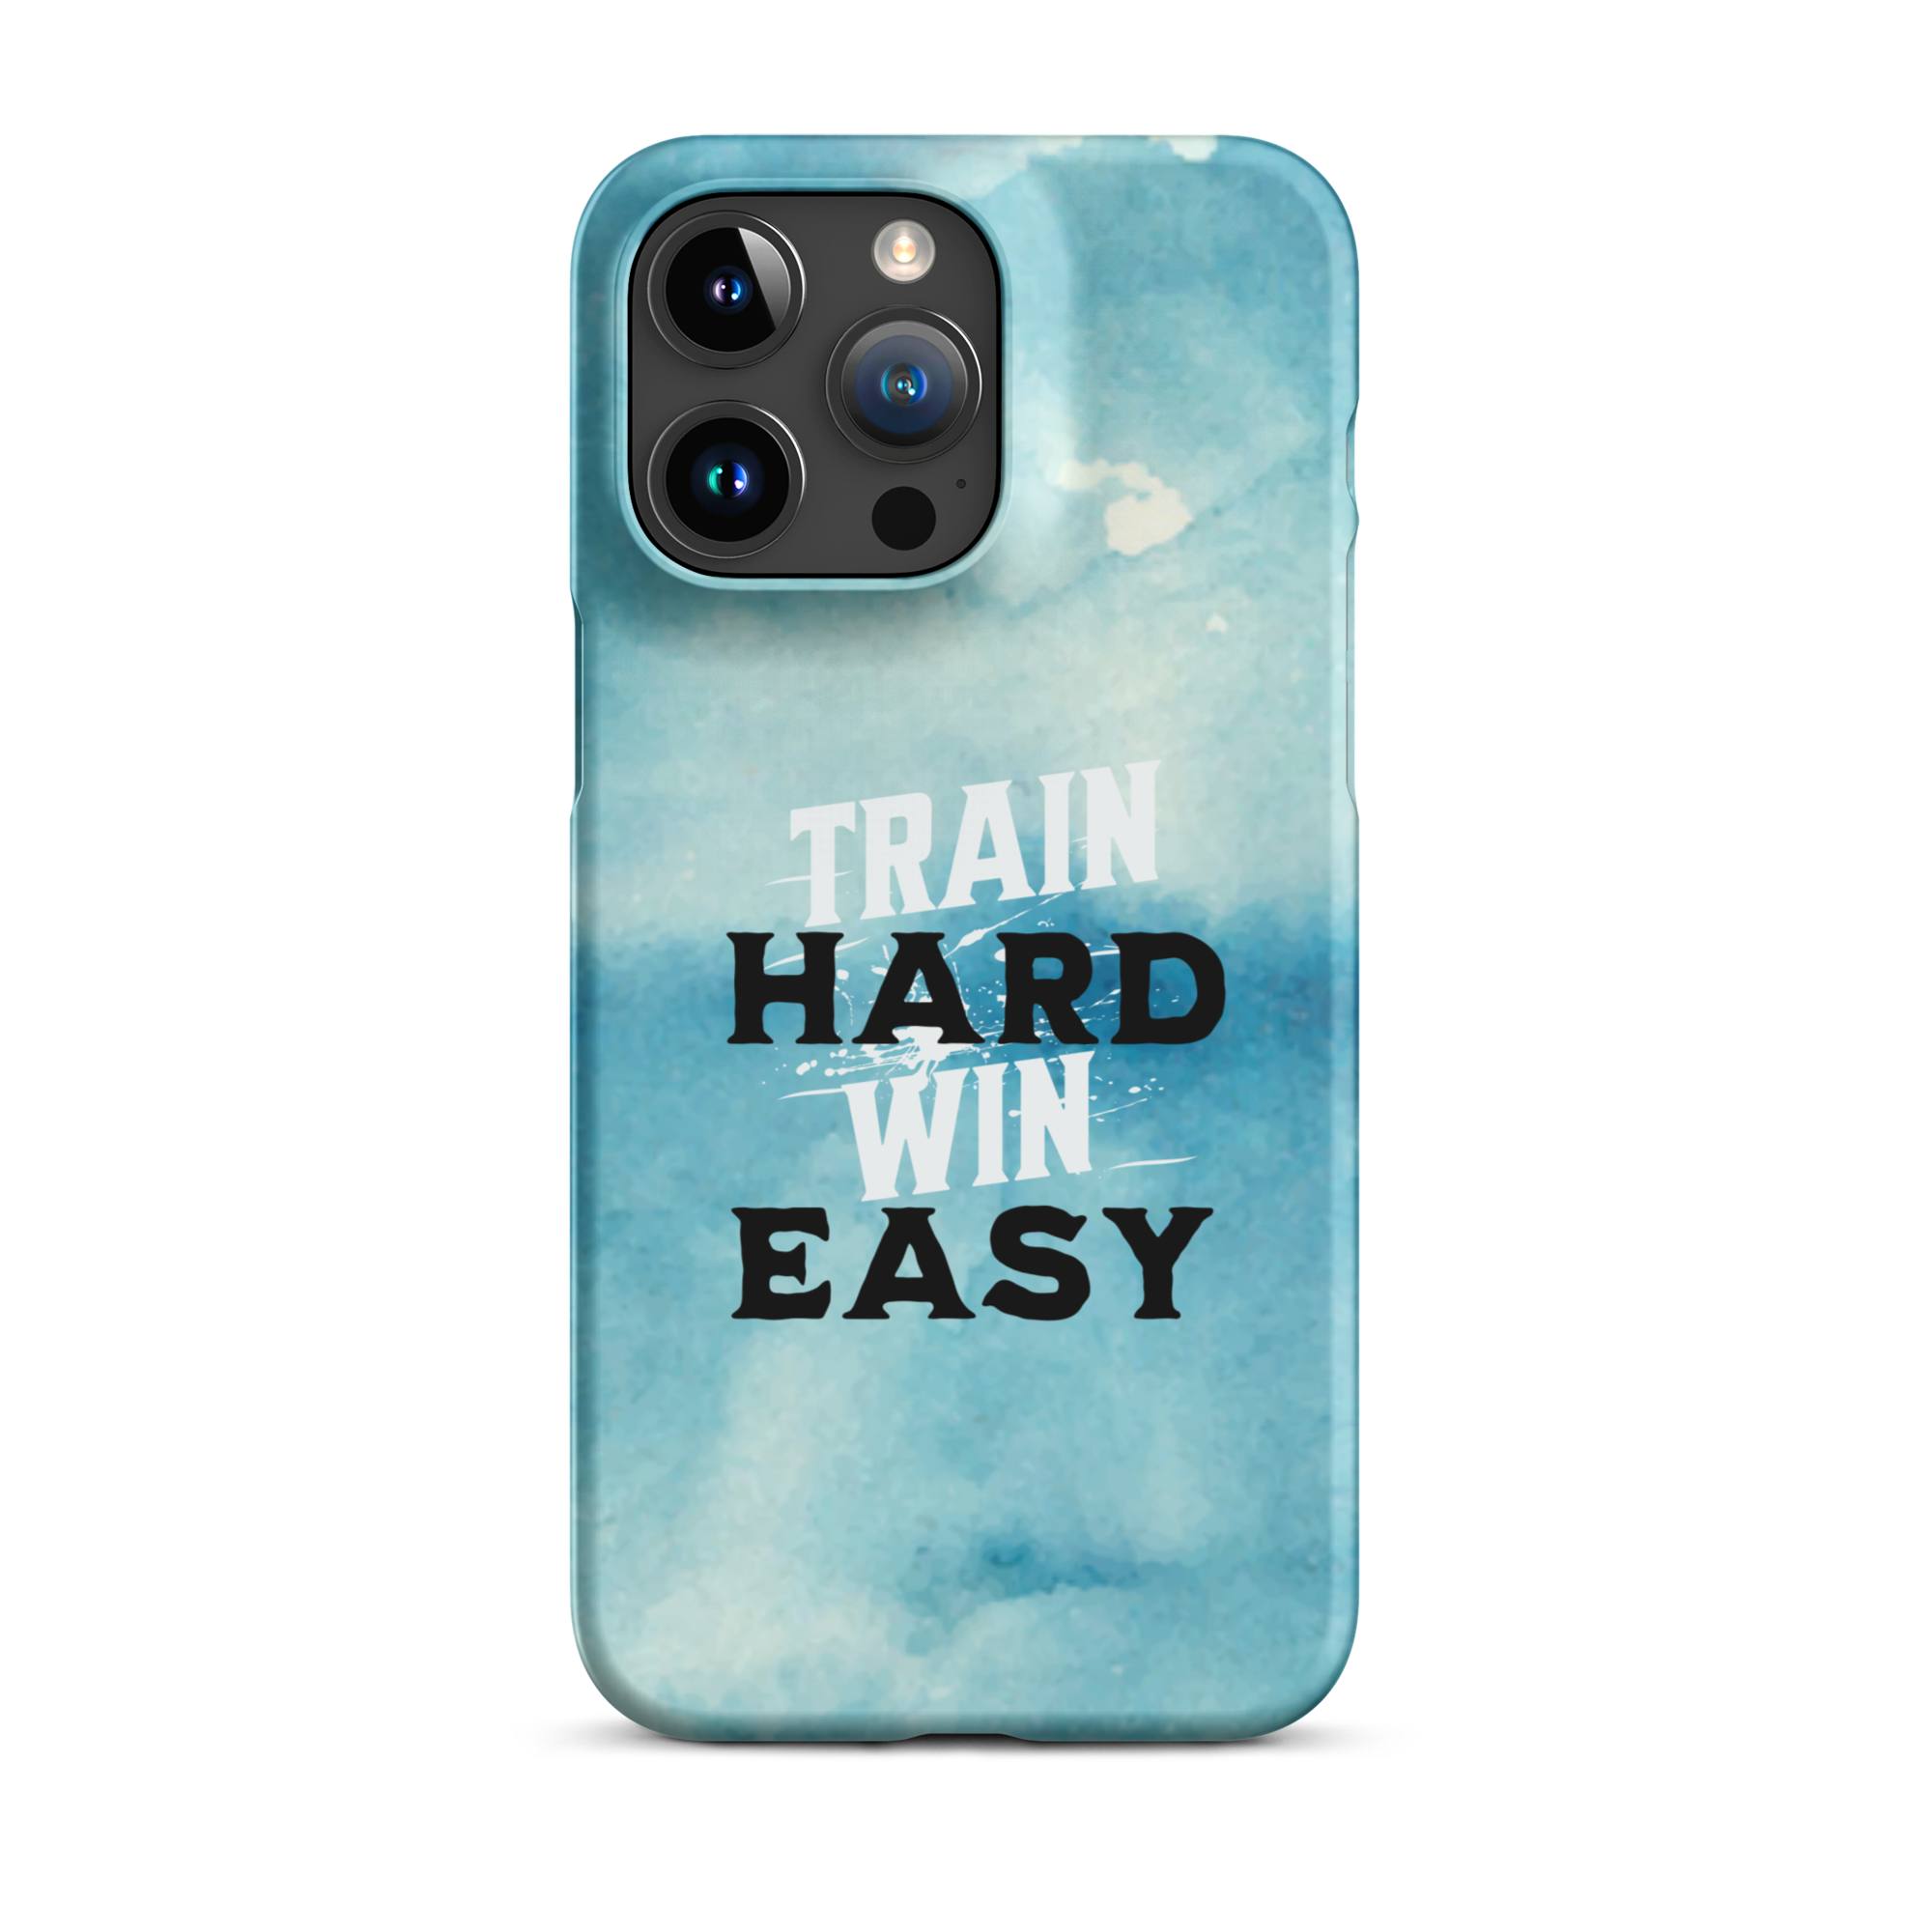 Train Hard, Win Easy iPhone case